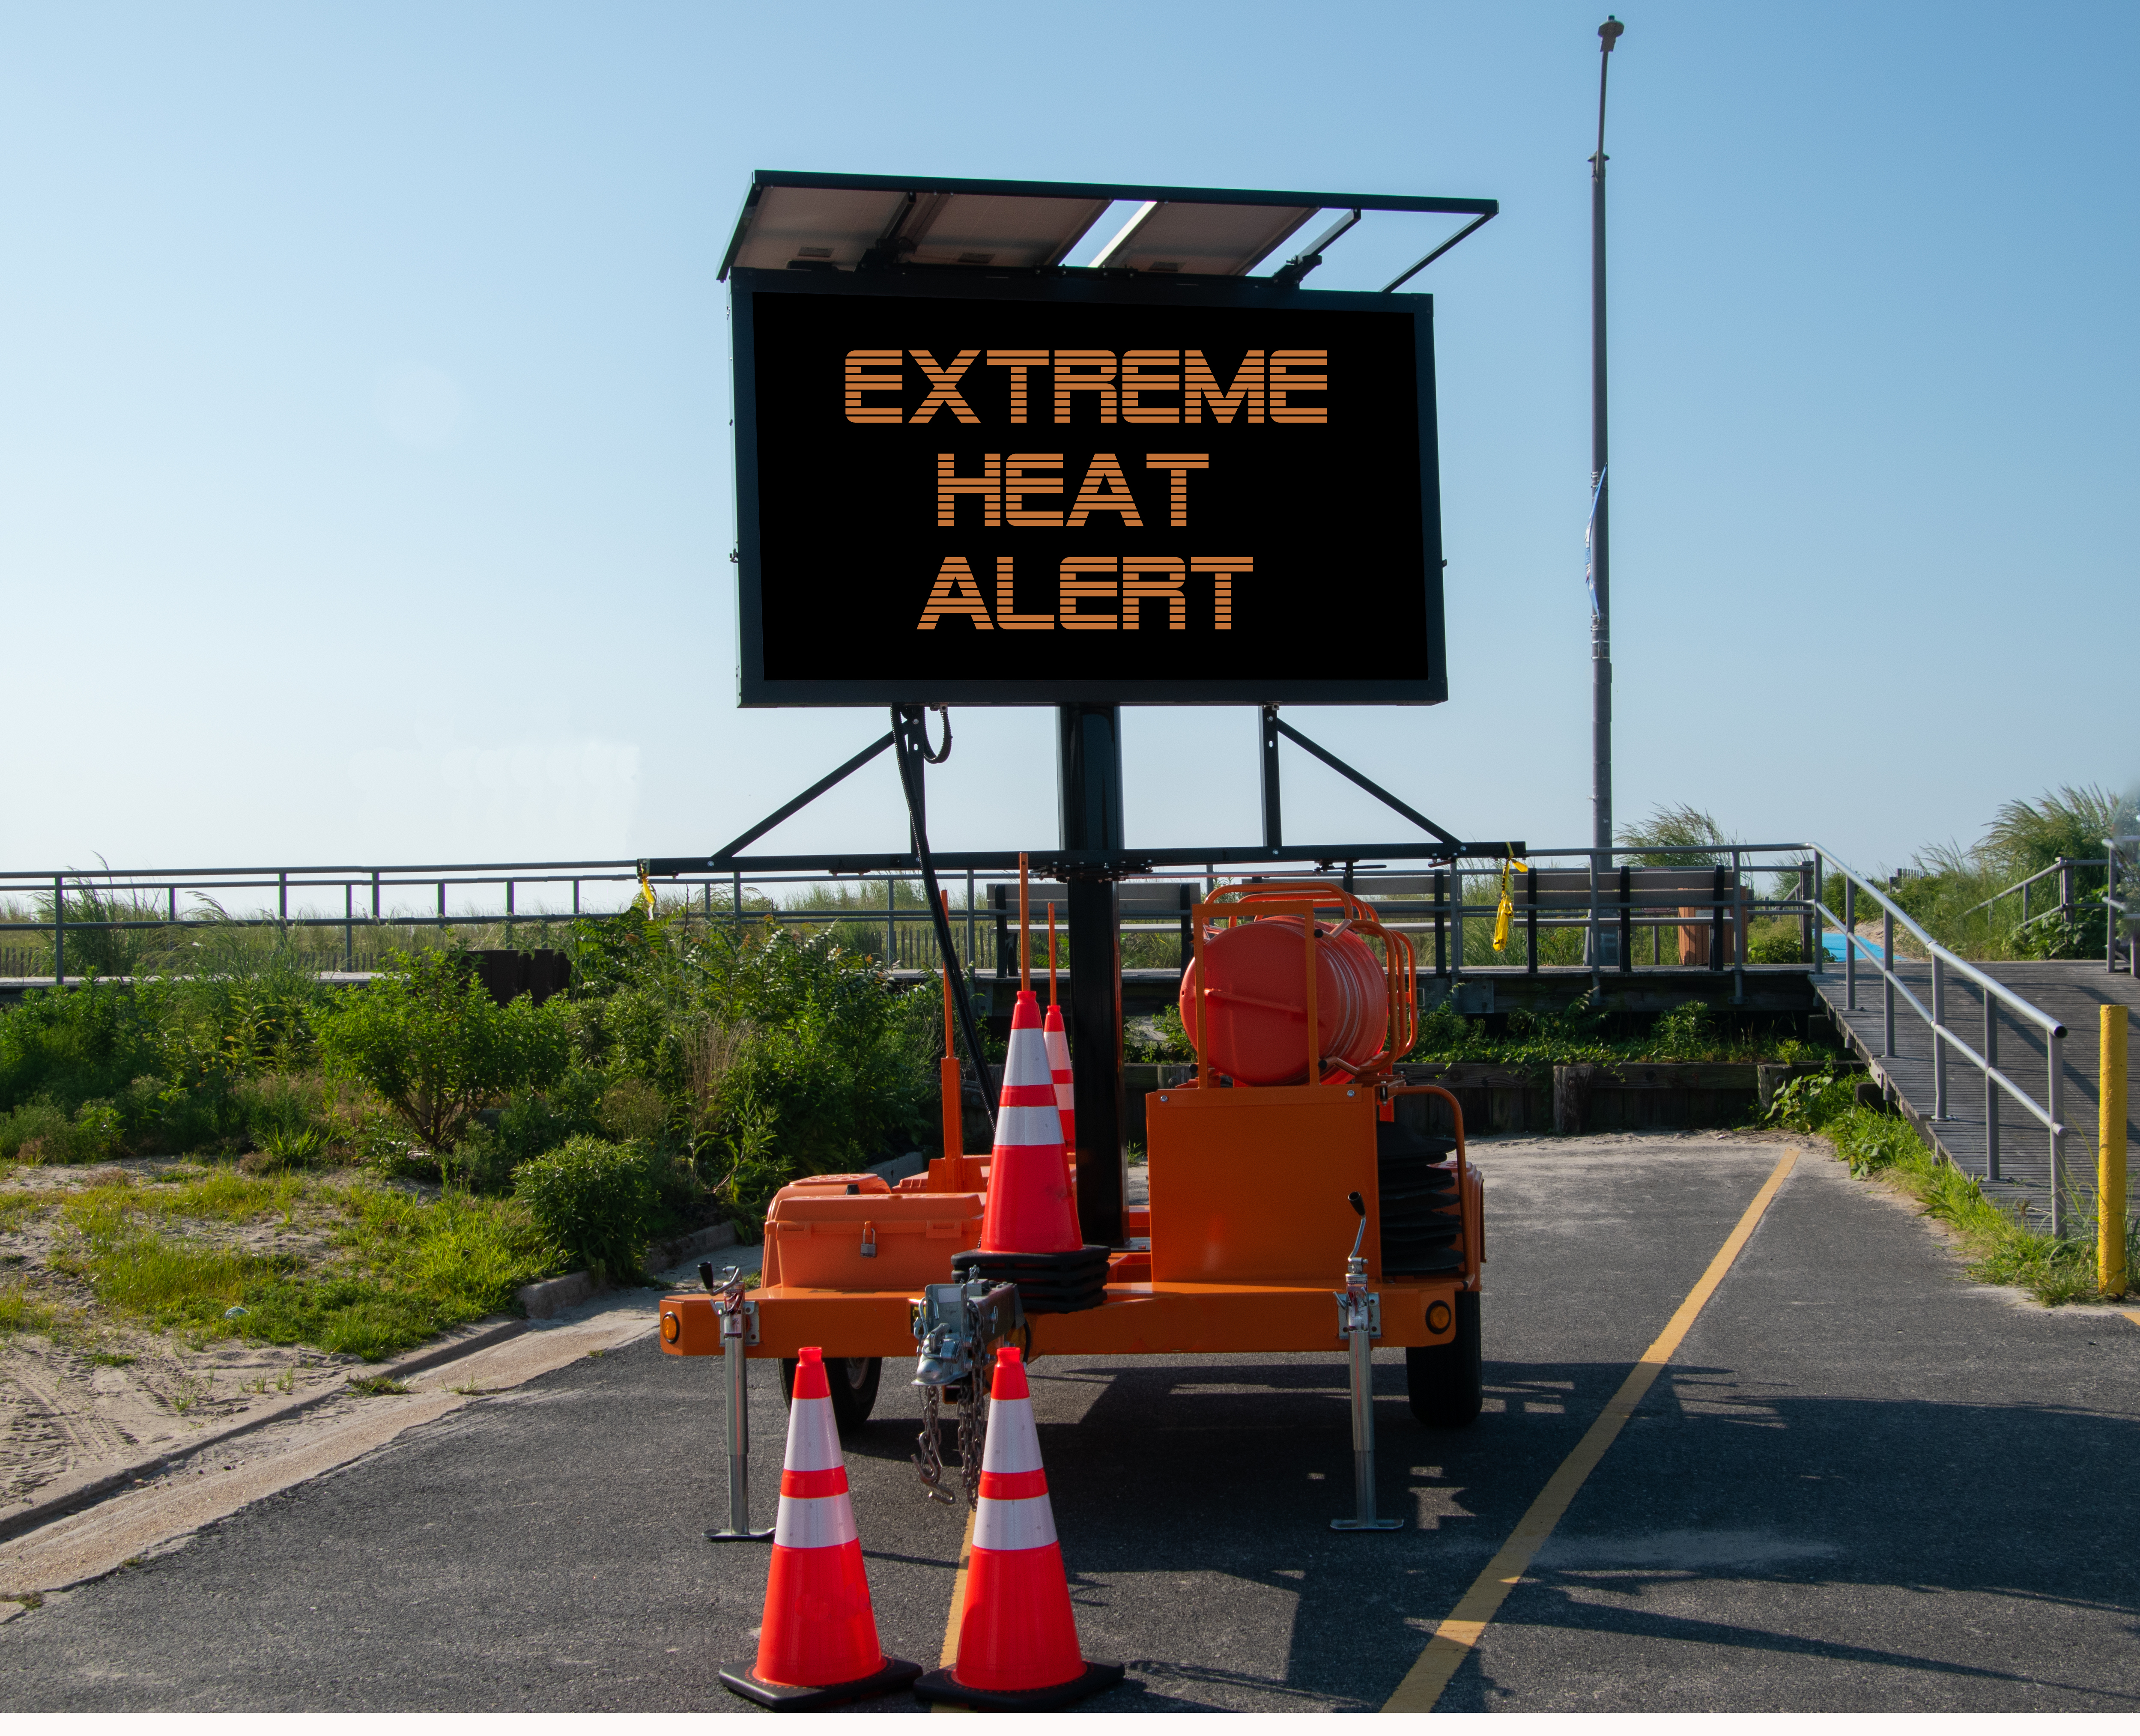 'Extreme heat alert' street sign